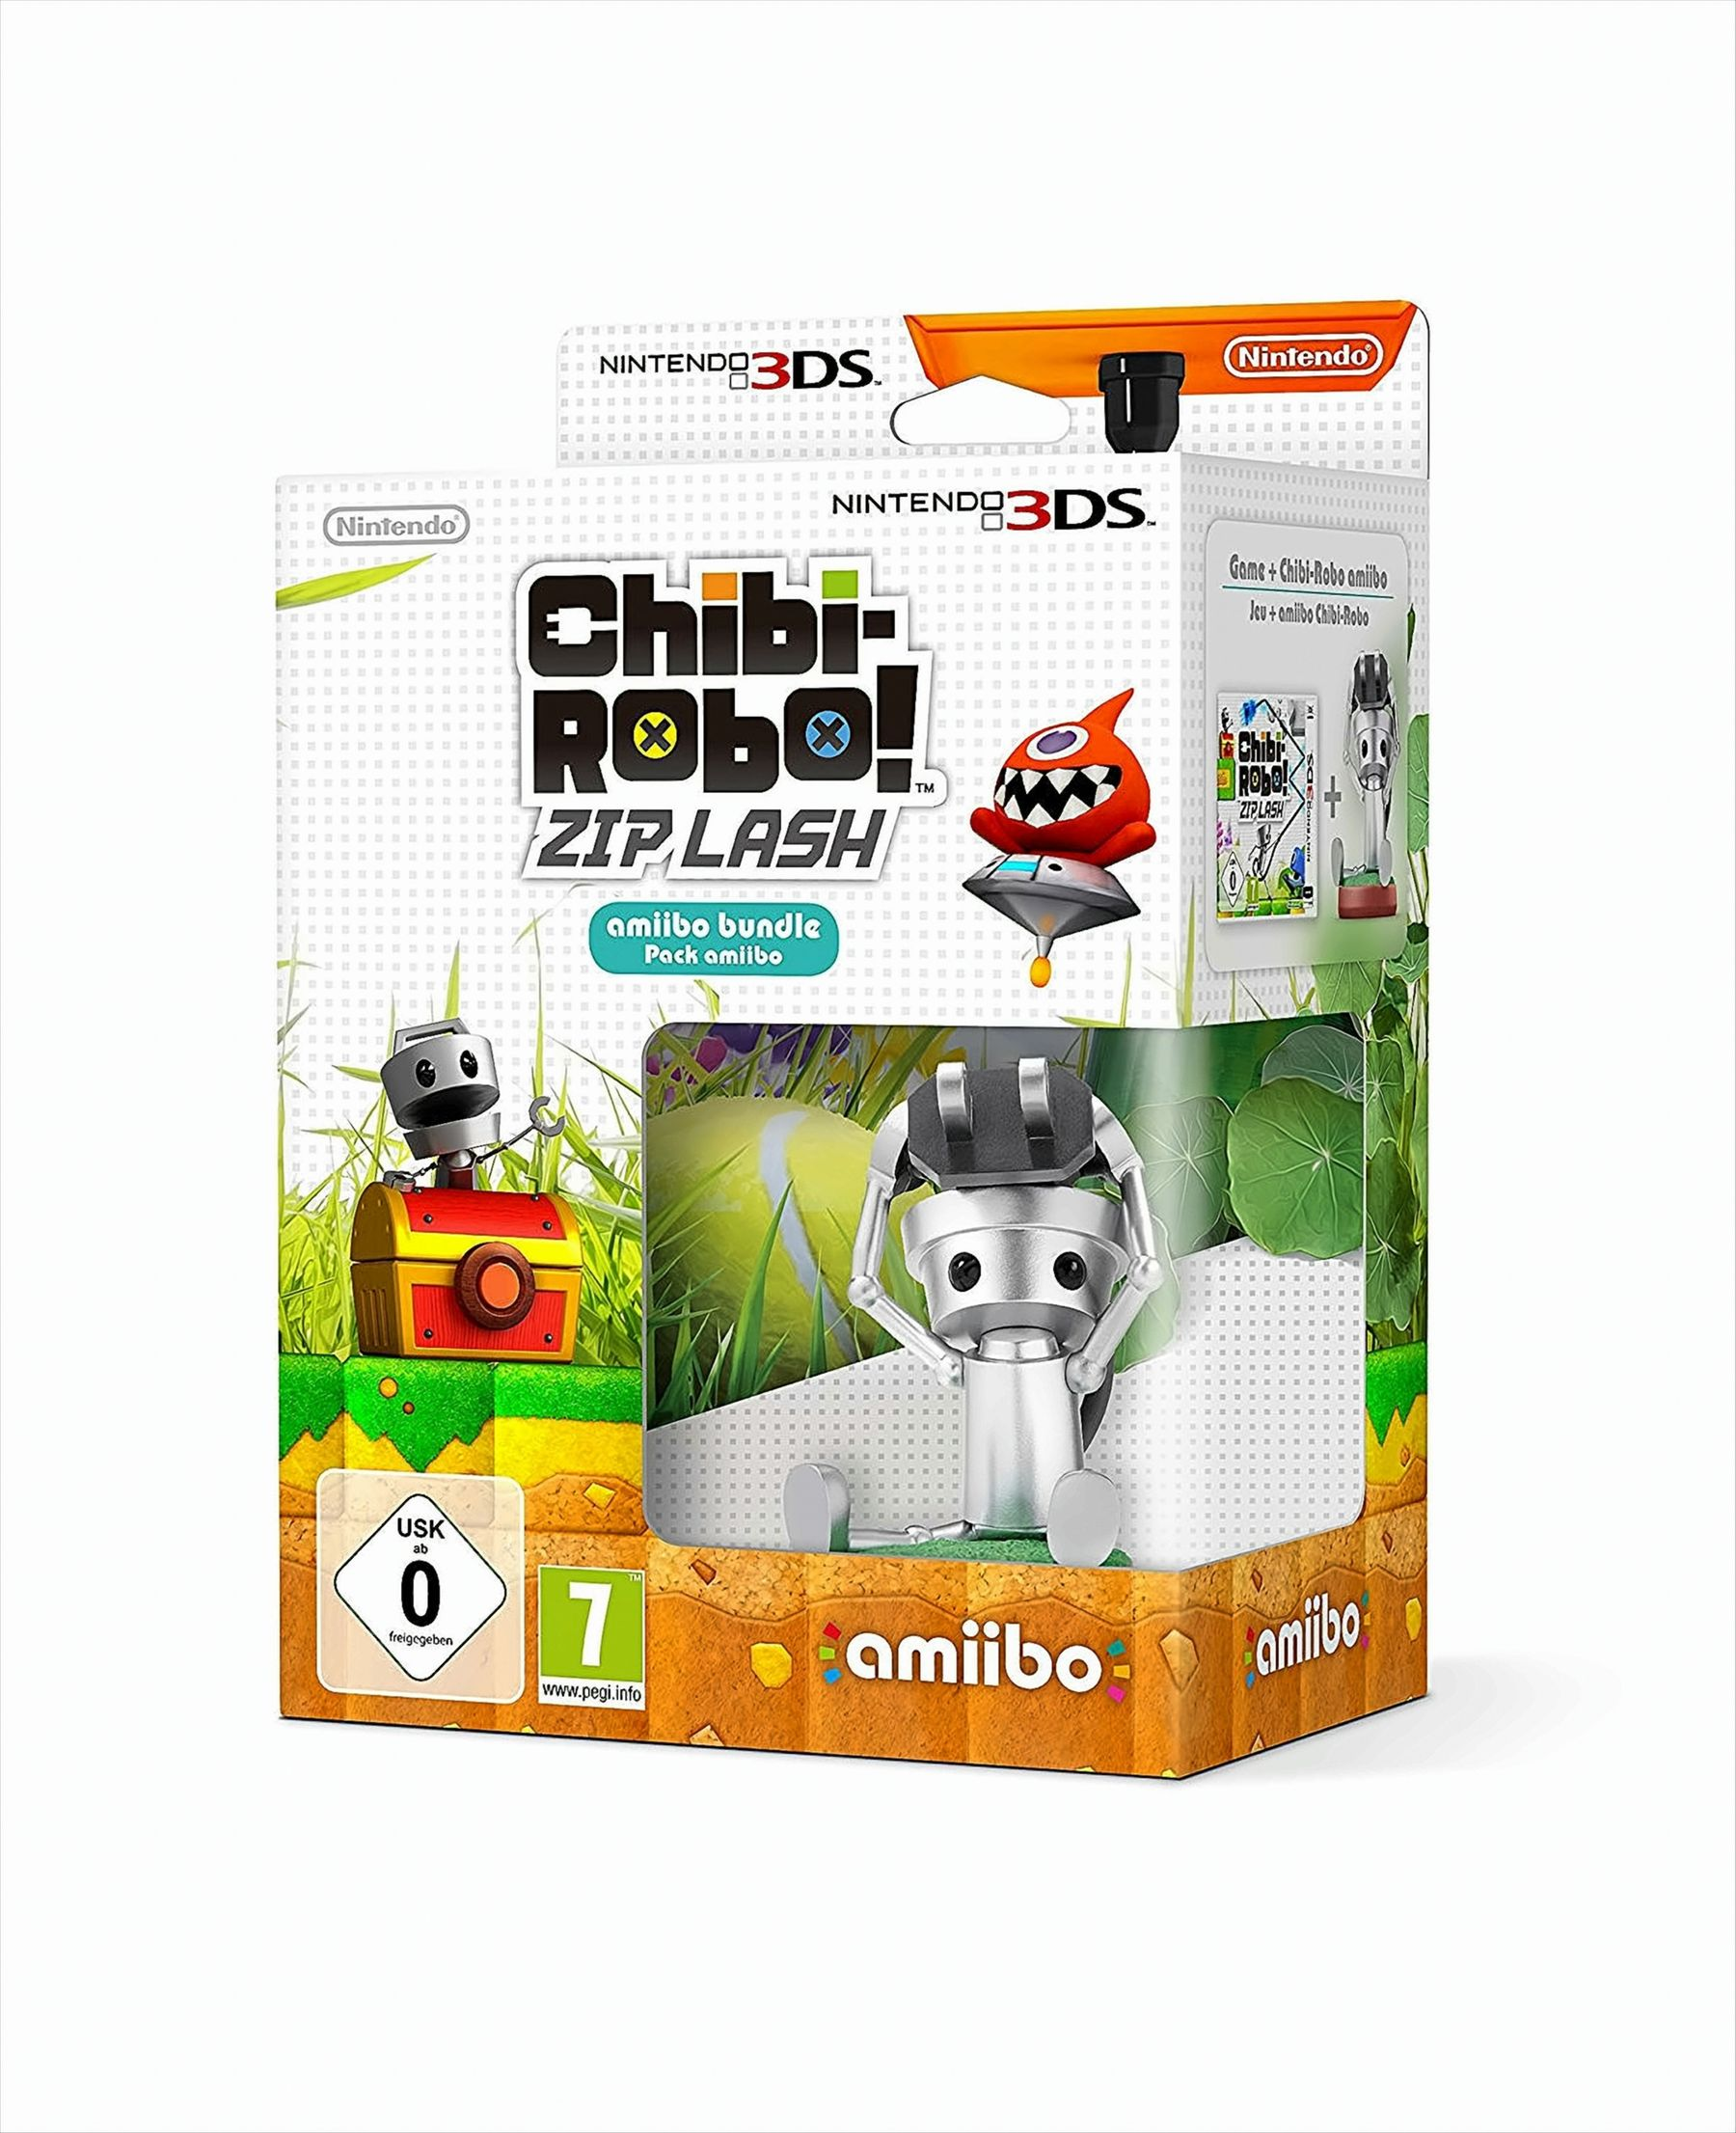 Chibi-Robo!: Zip Lash Edition Special amiibo inkl. [Nintendo - 3DS] 